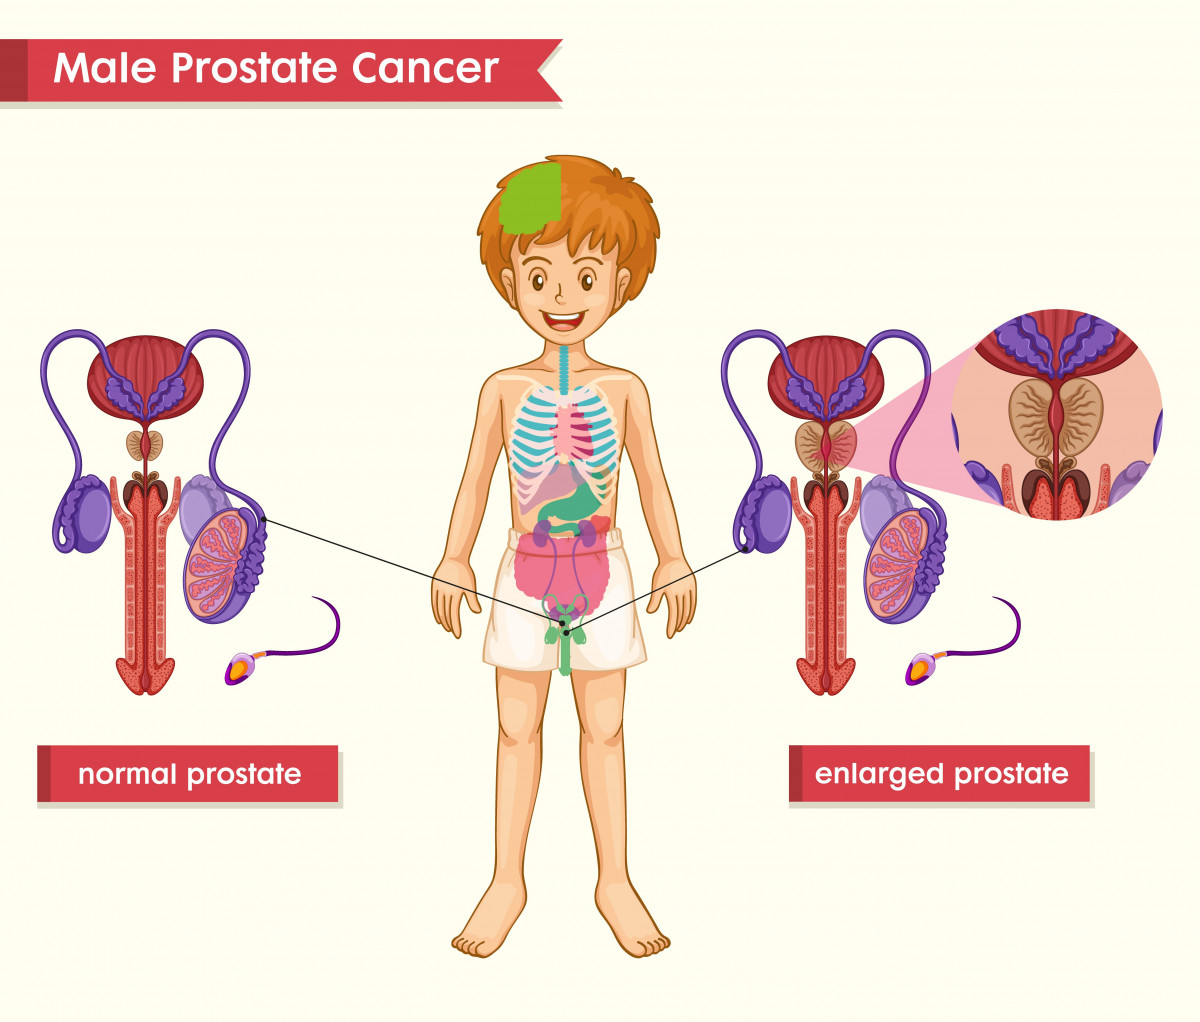 pencegahan prostat, pencegahan prostatitis, cara mencegah kanker prostat, cara mencegah prostat, mencegah prostat, cara mencegah prostatitis, mencegah kanker prostat, pencegahan kanker prostat, yesdok